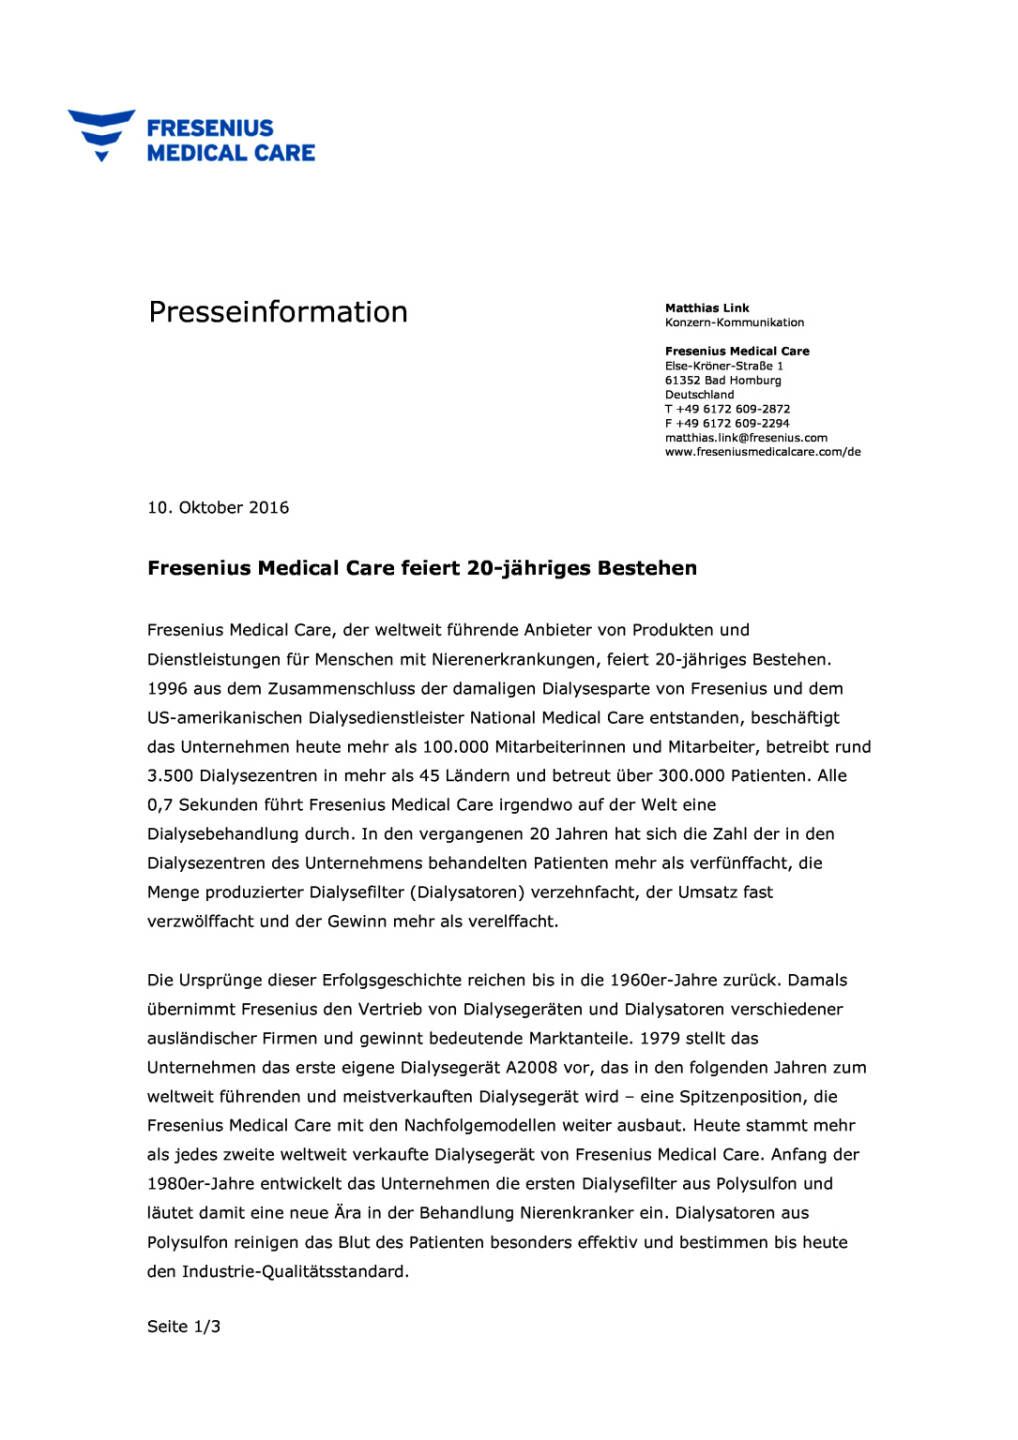 Fresenius Medical Care feiert 20-jähriges Bestehen, Seite 1/3, komplettes Dokument unter http://boerse-social.com/static/uploads/file_1895_fresenius_medical_care_feiert_20-jahriges_bestehen.pdf